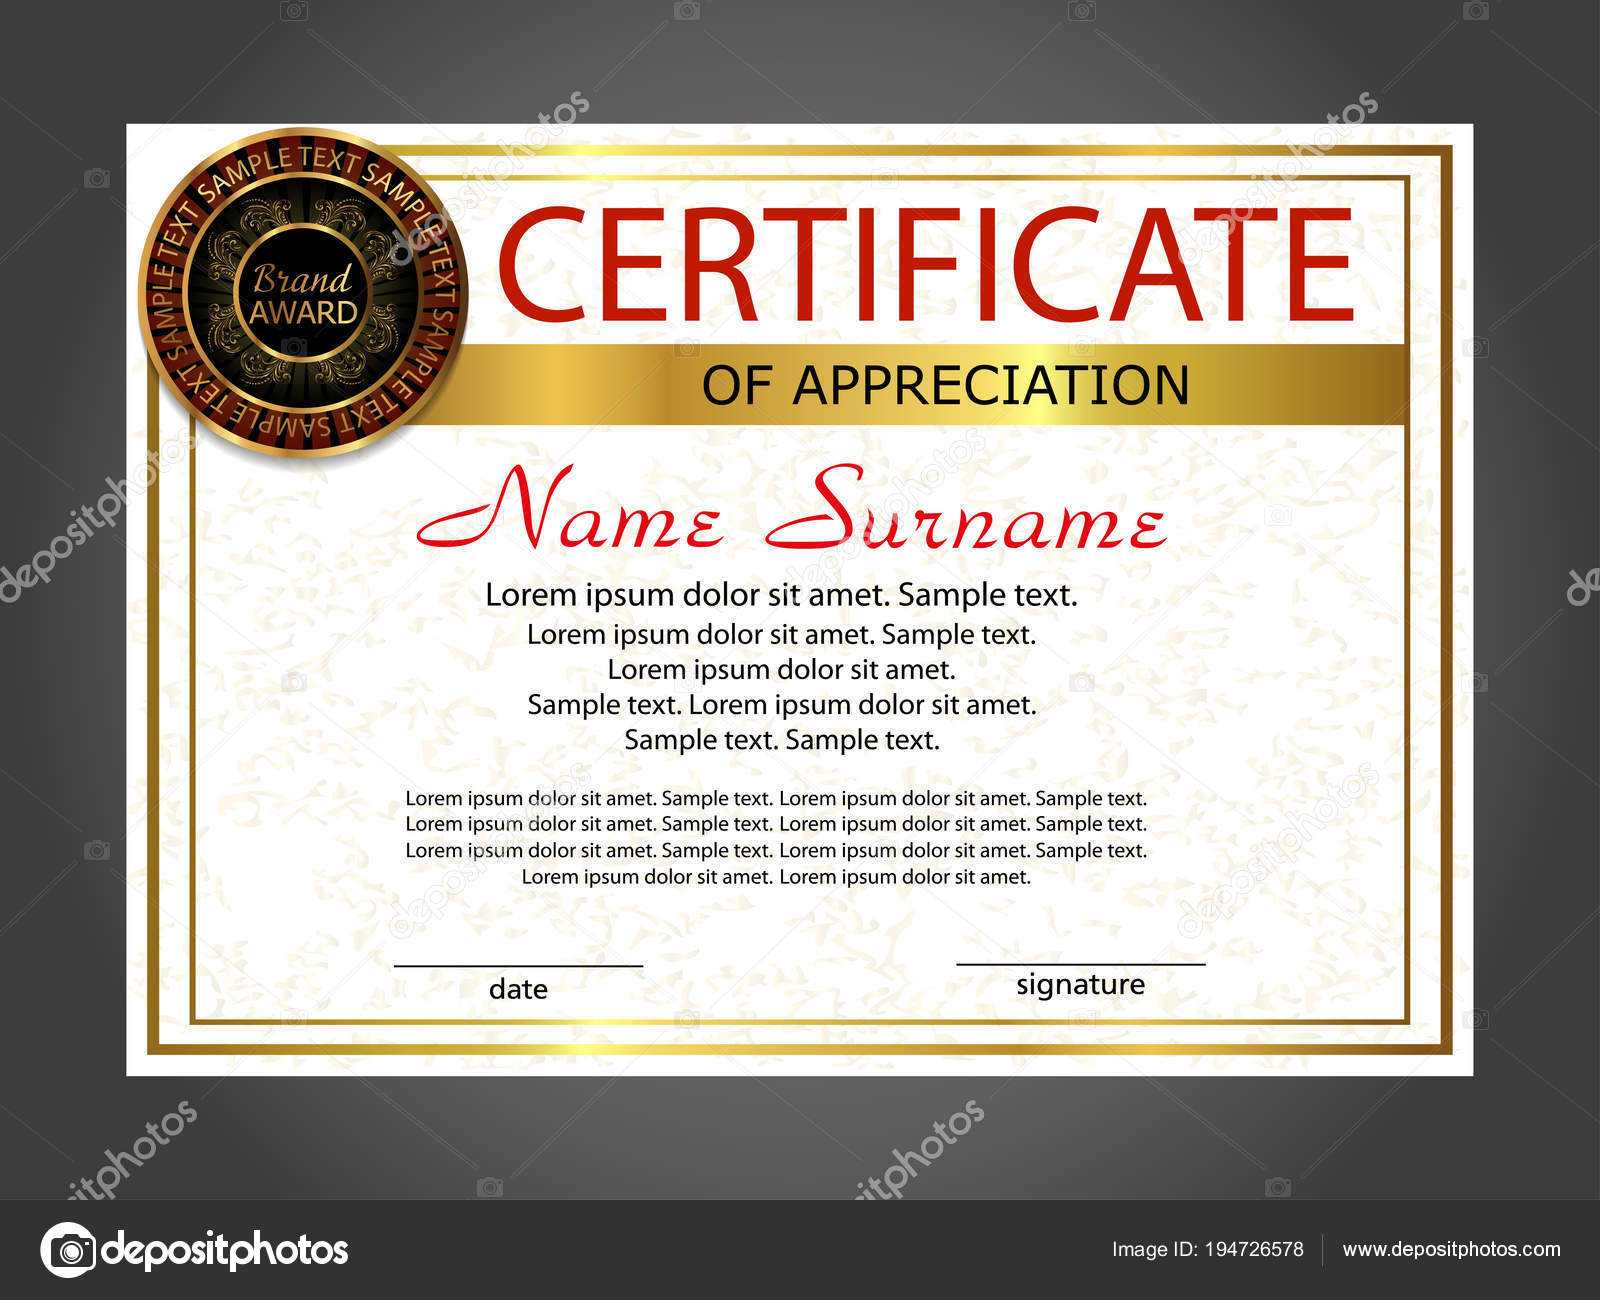 Certificate Of Appreciation, Diploma Template. Award Winner With Winner Certificate Template